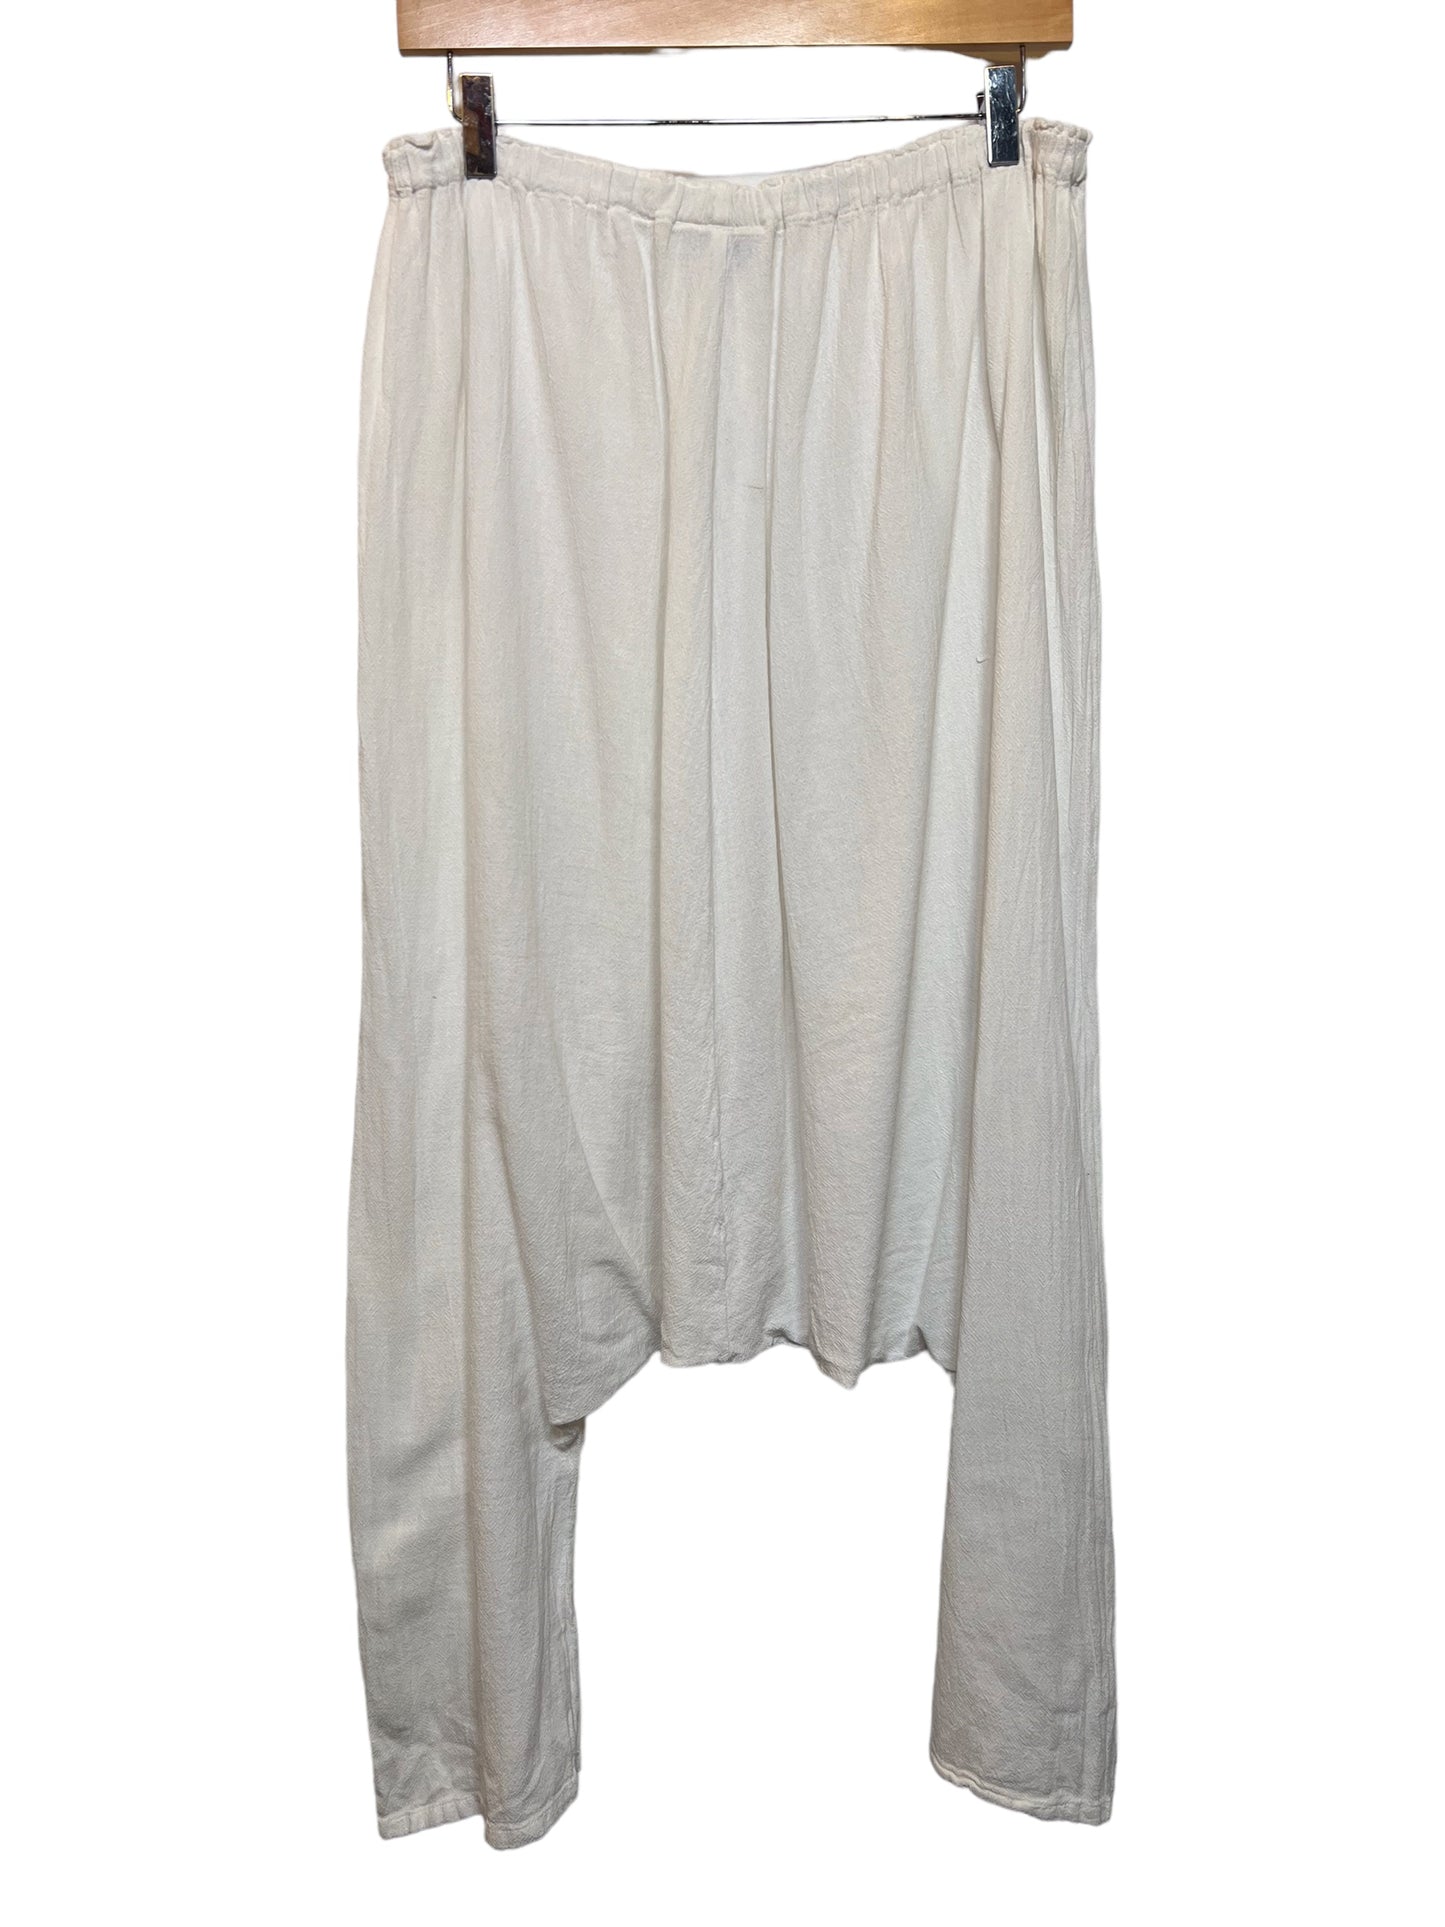 Women’s White Elasticated Waist Harem Pants (Size XL)